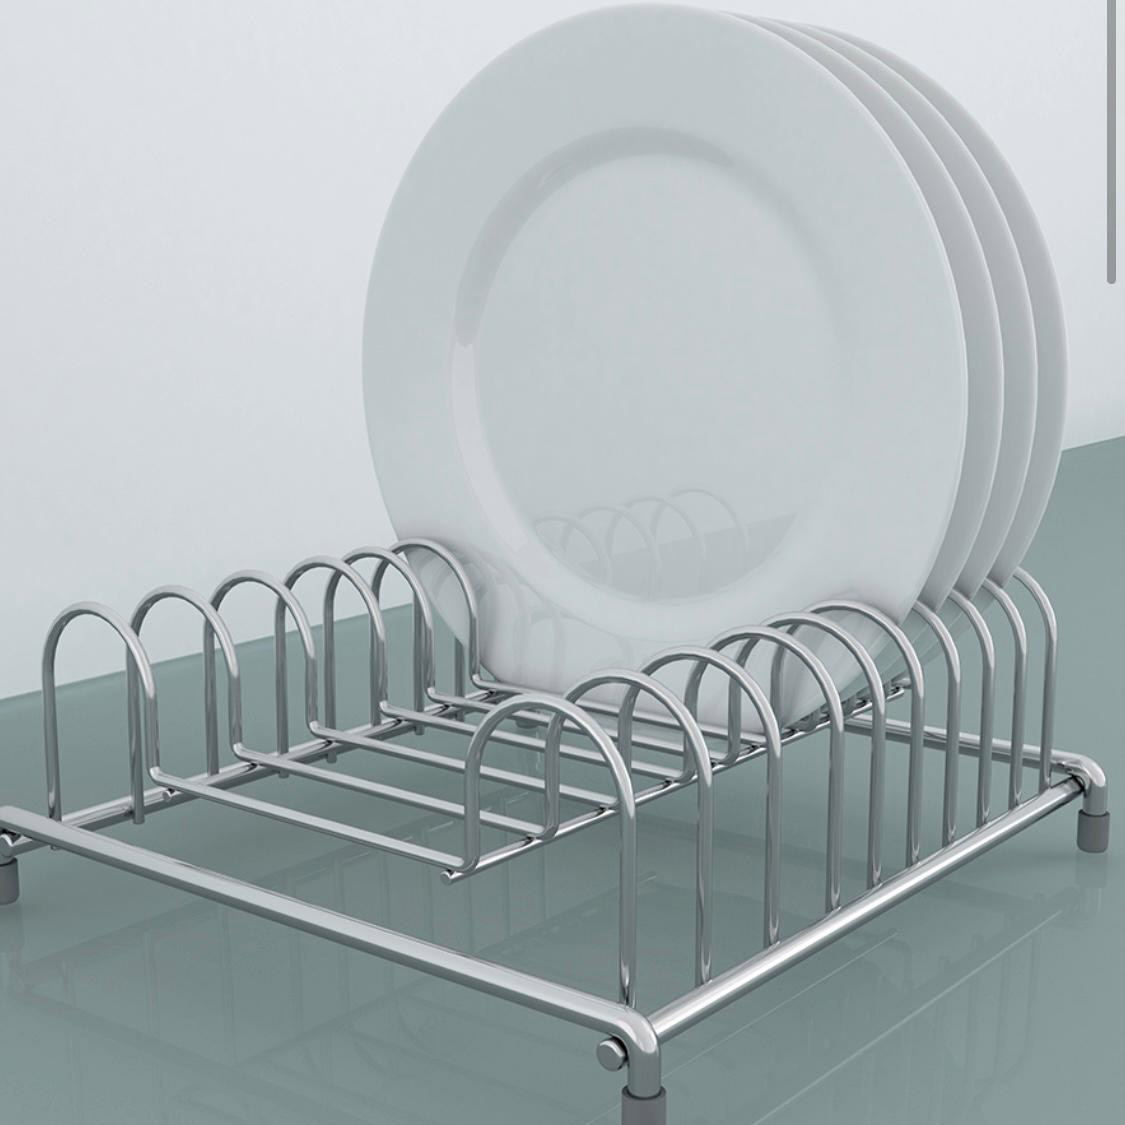 Buy Portable Dish Rack Online | Manufacturing Production Services | Qetaat.com